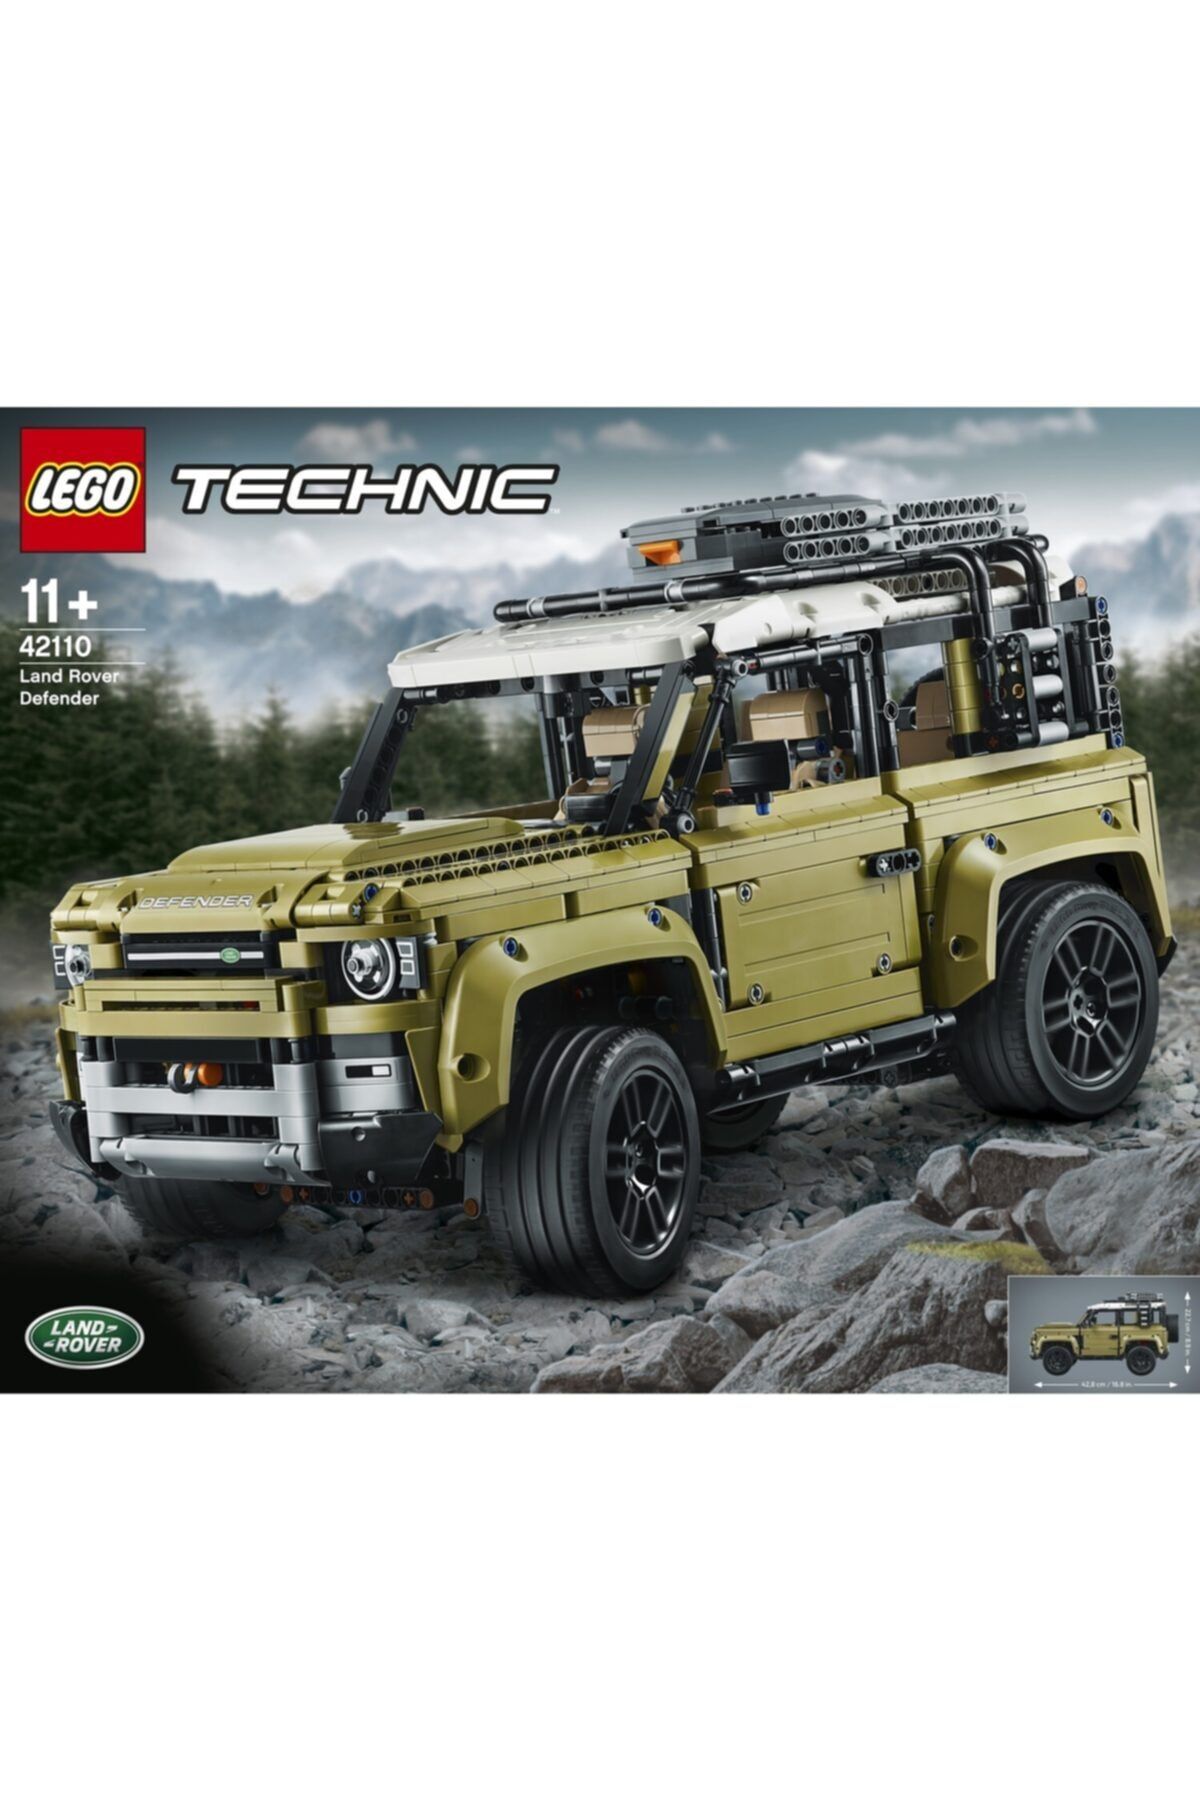 LEGO لگو فنی 42110 لندرور دیفند